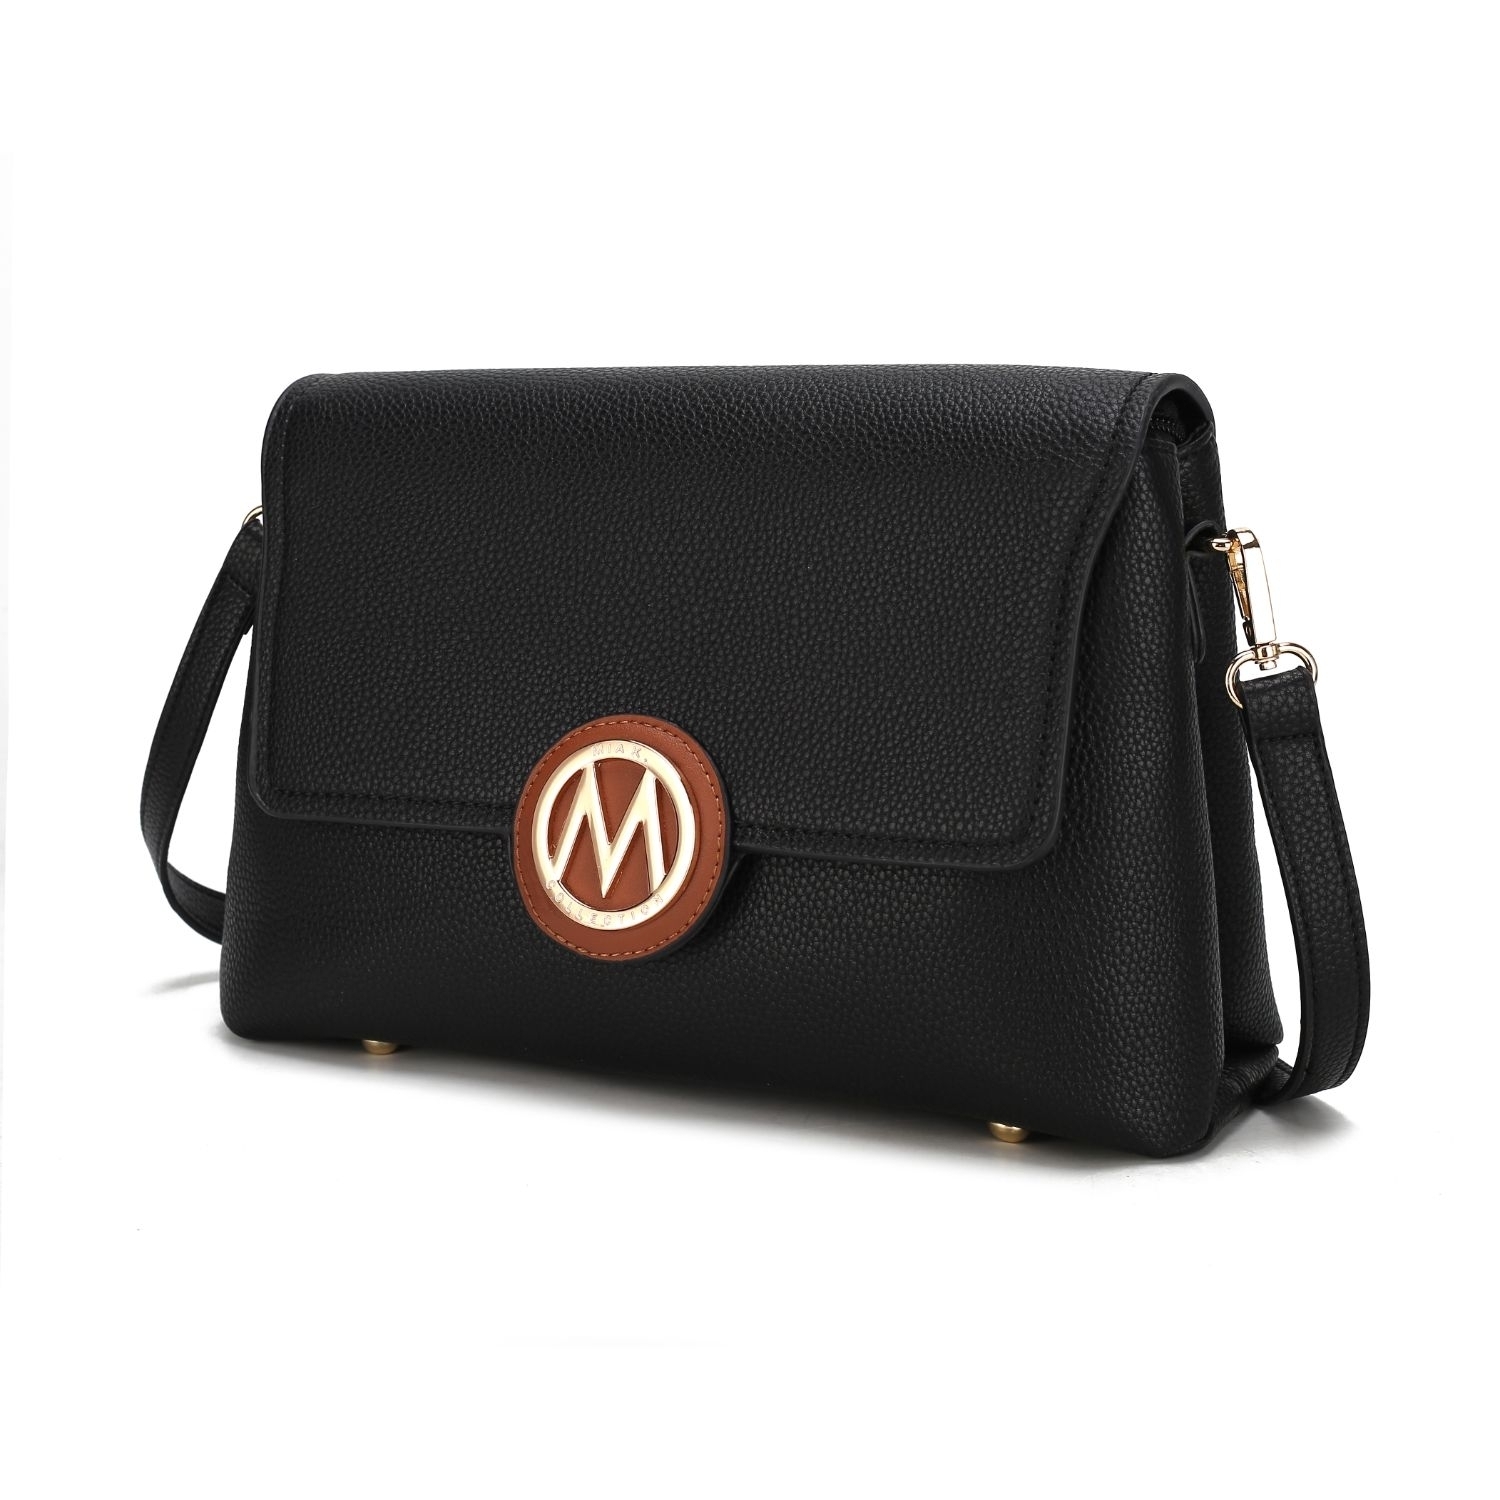 MKF Collection Johanna Multi Compartment Crossbody Handbag By Mia K - Pewter-black